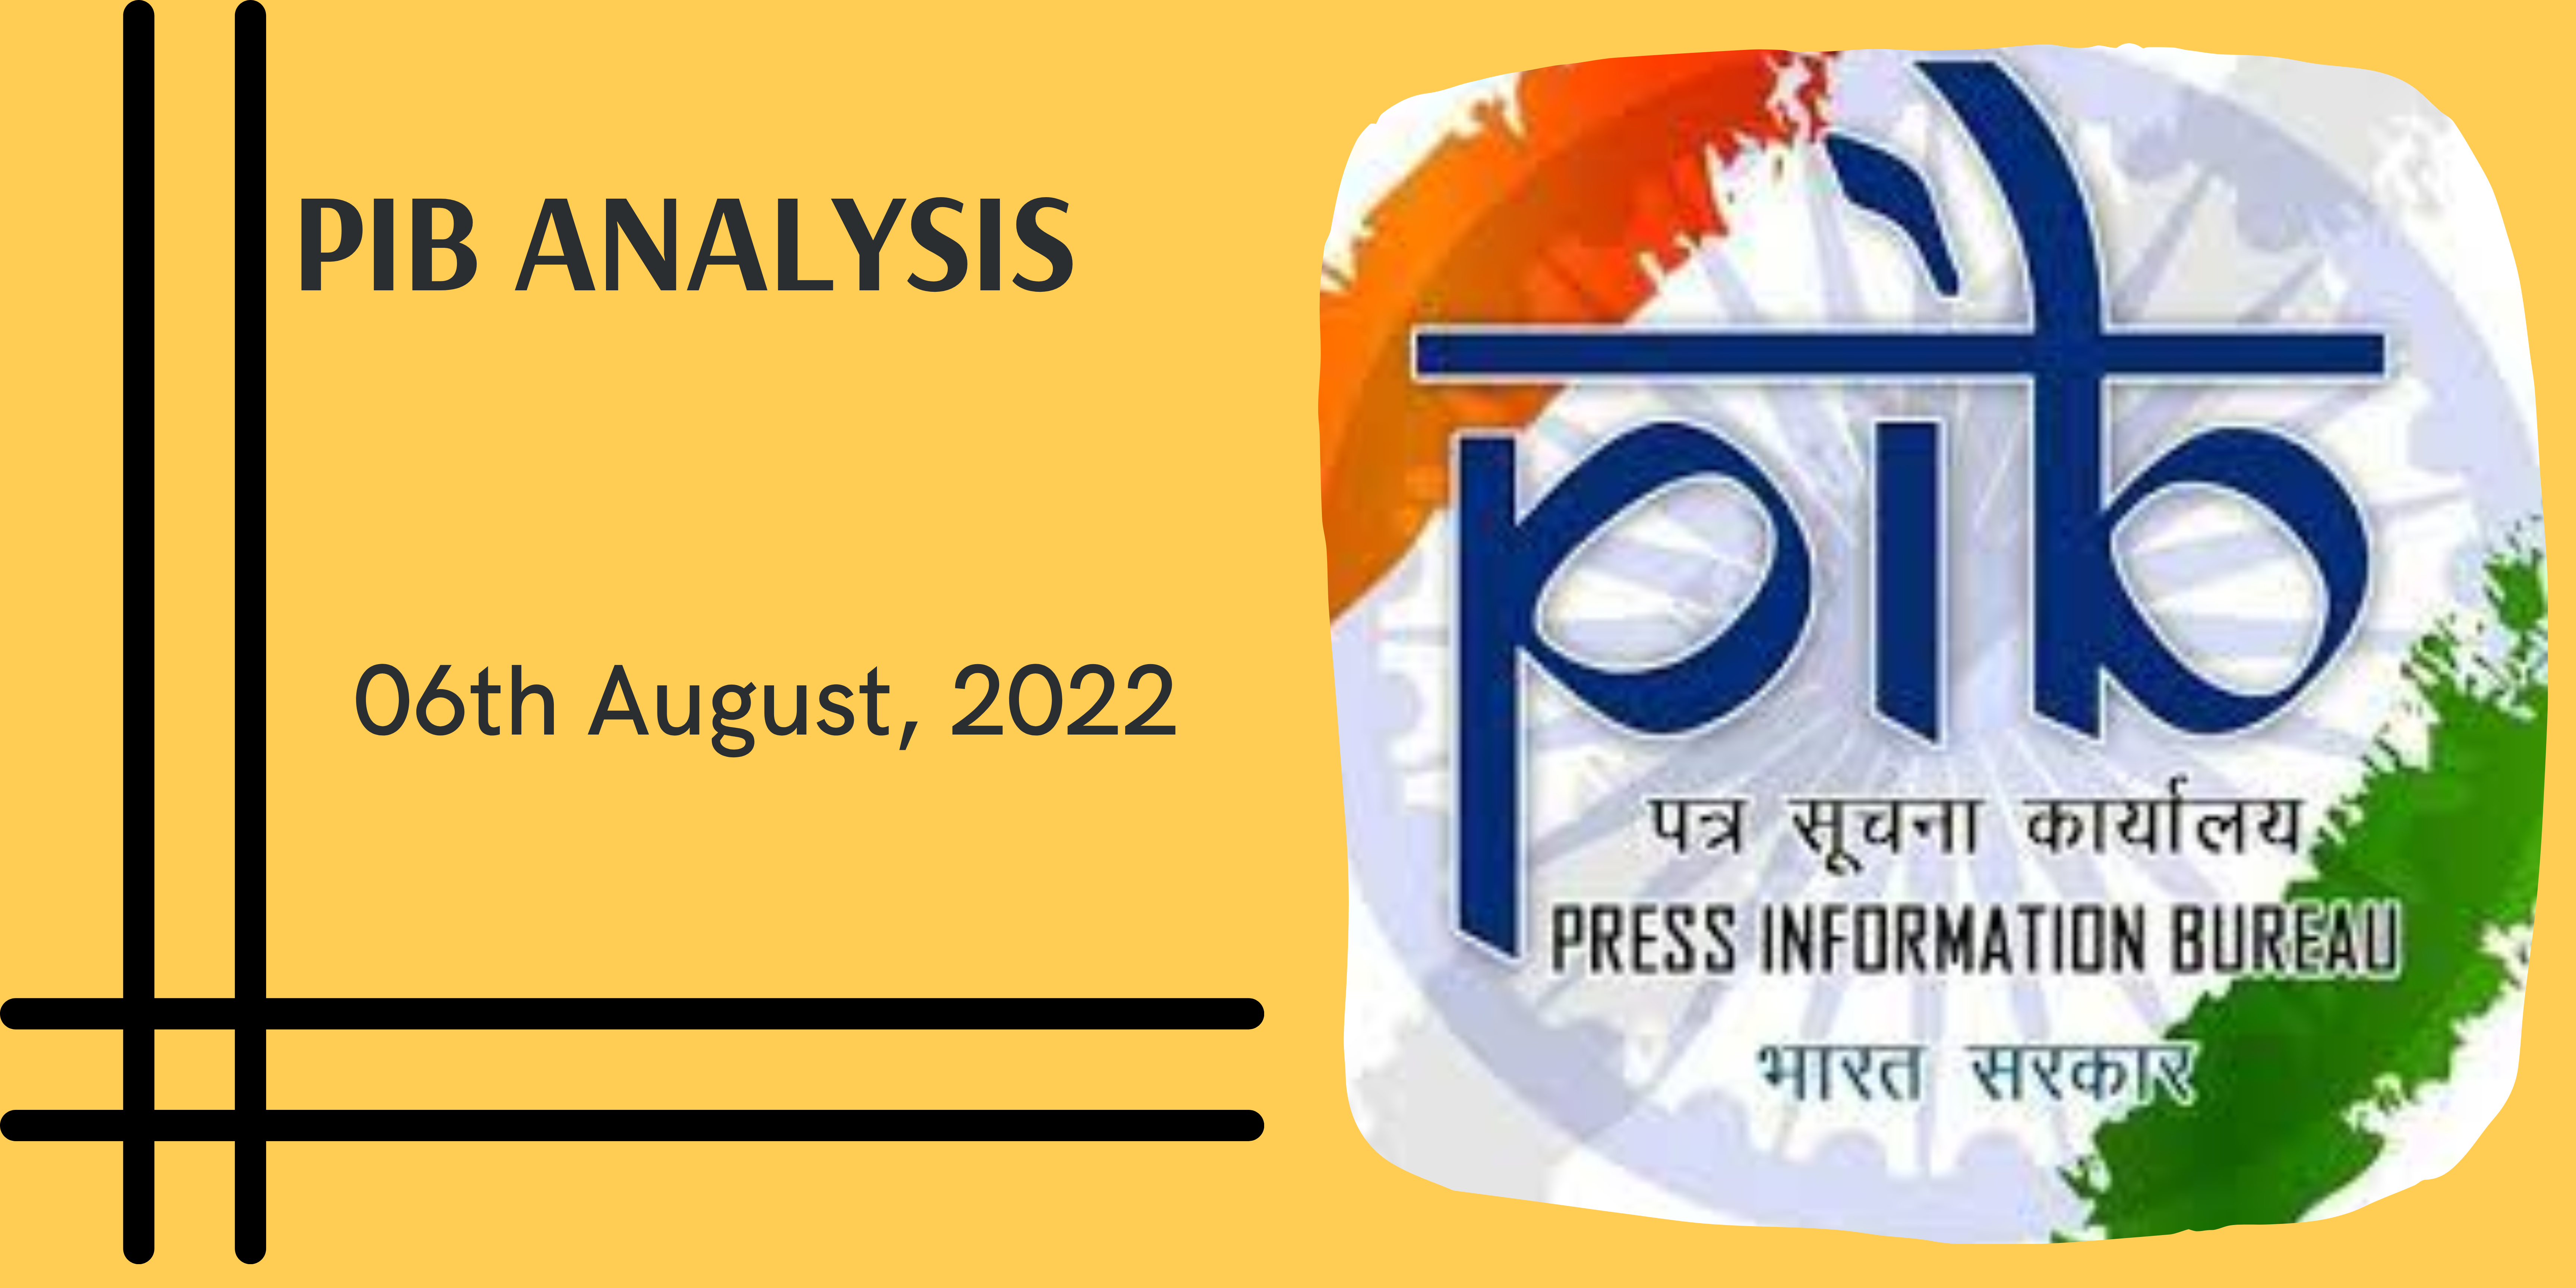 PIB analysis for UPSC